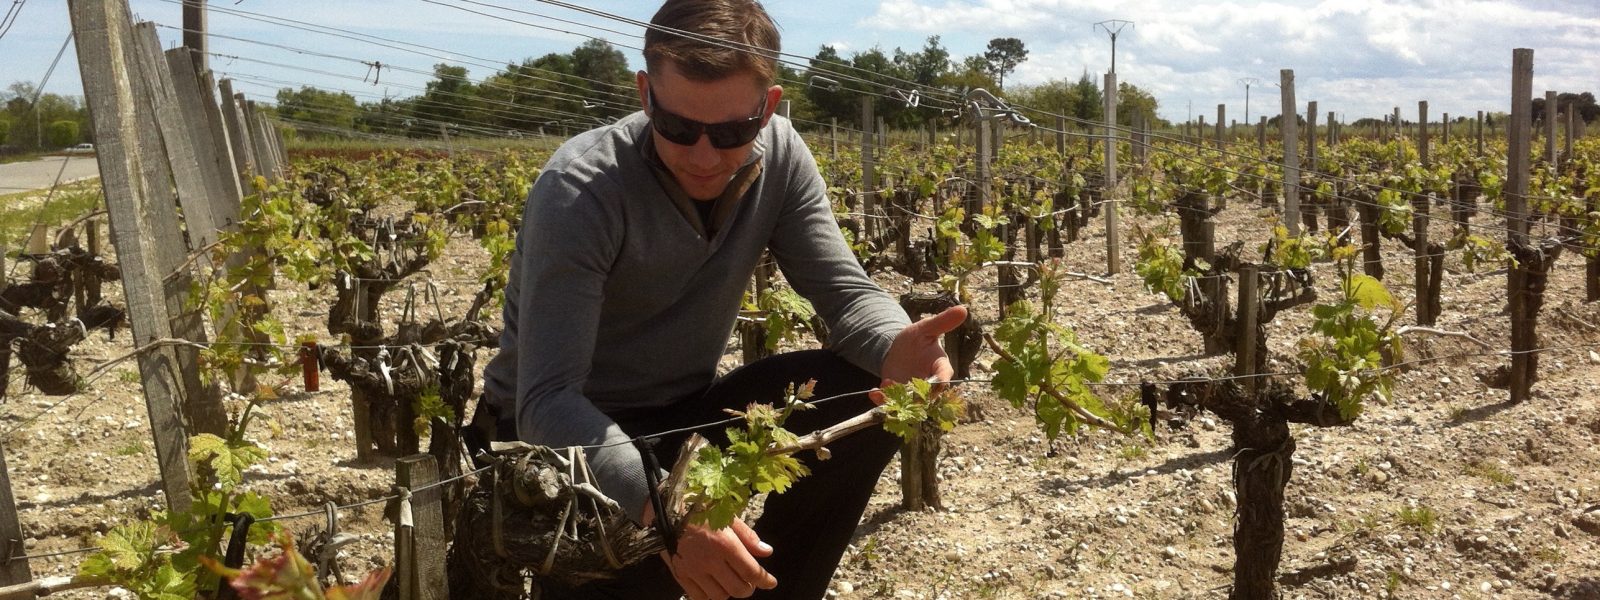 Adrian in a vineyard in Europe